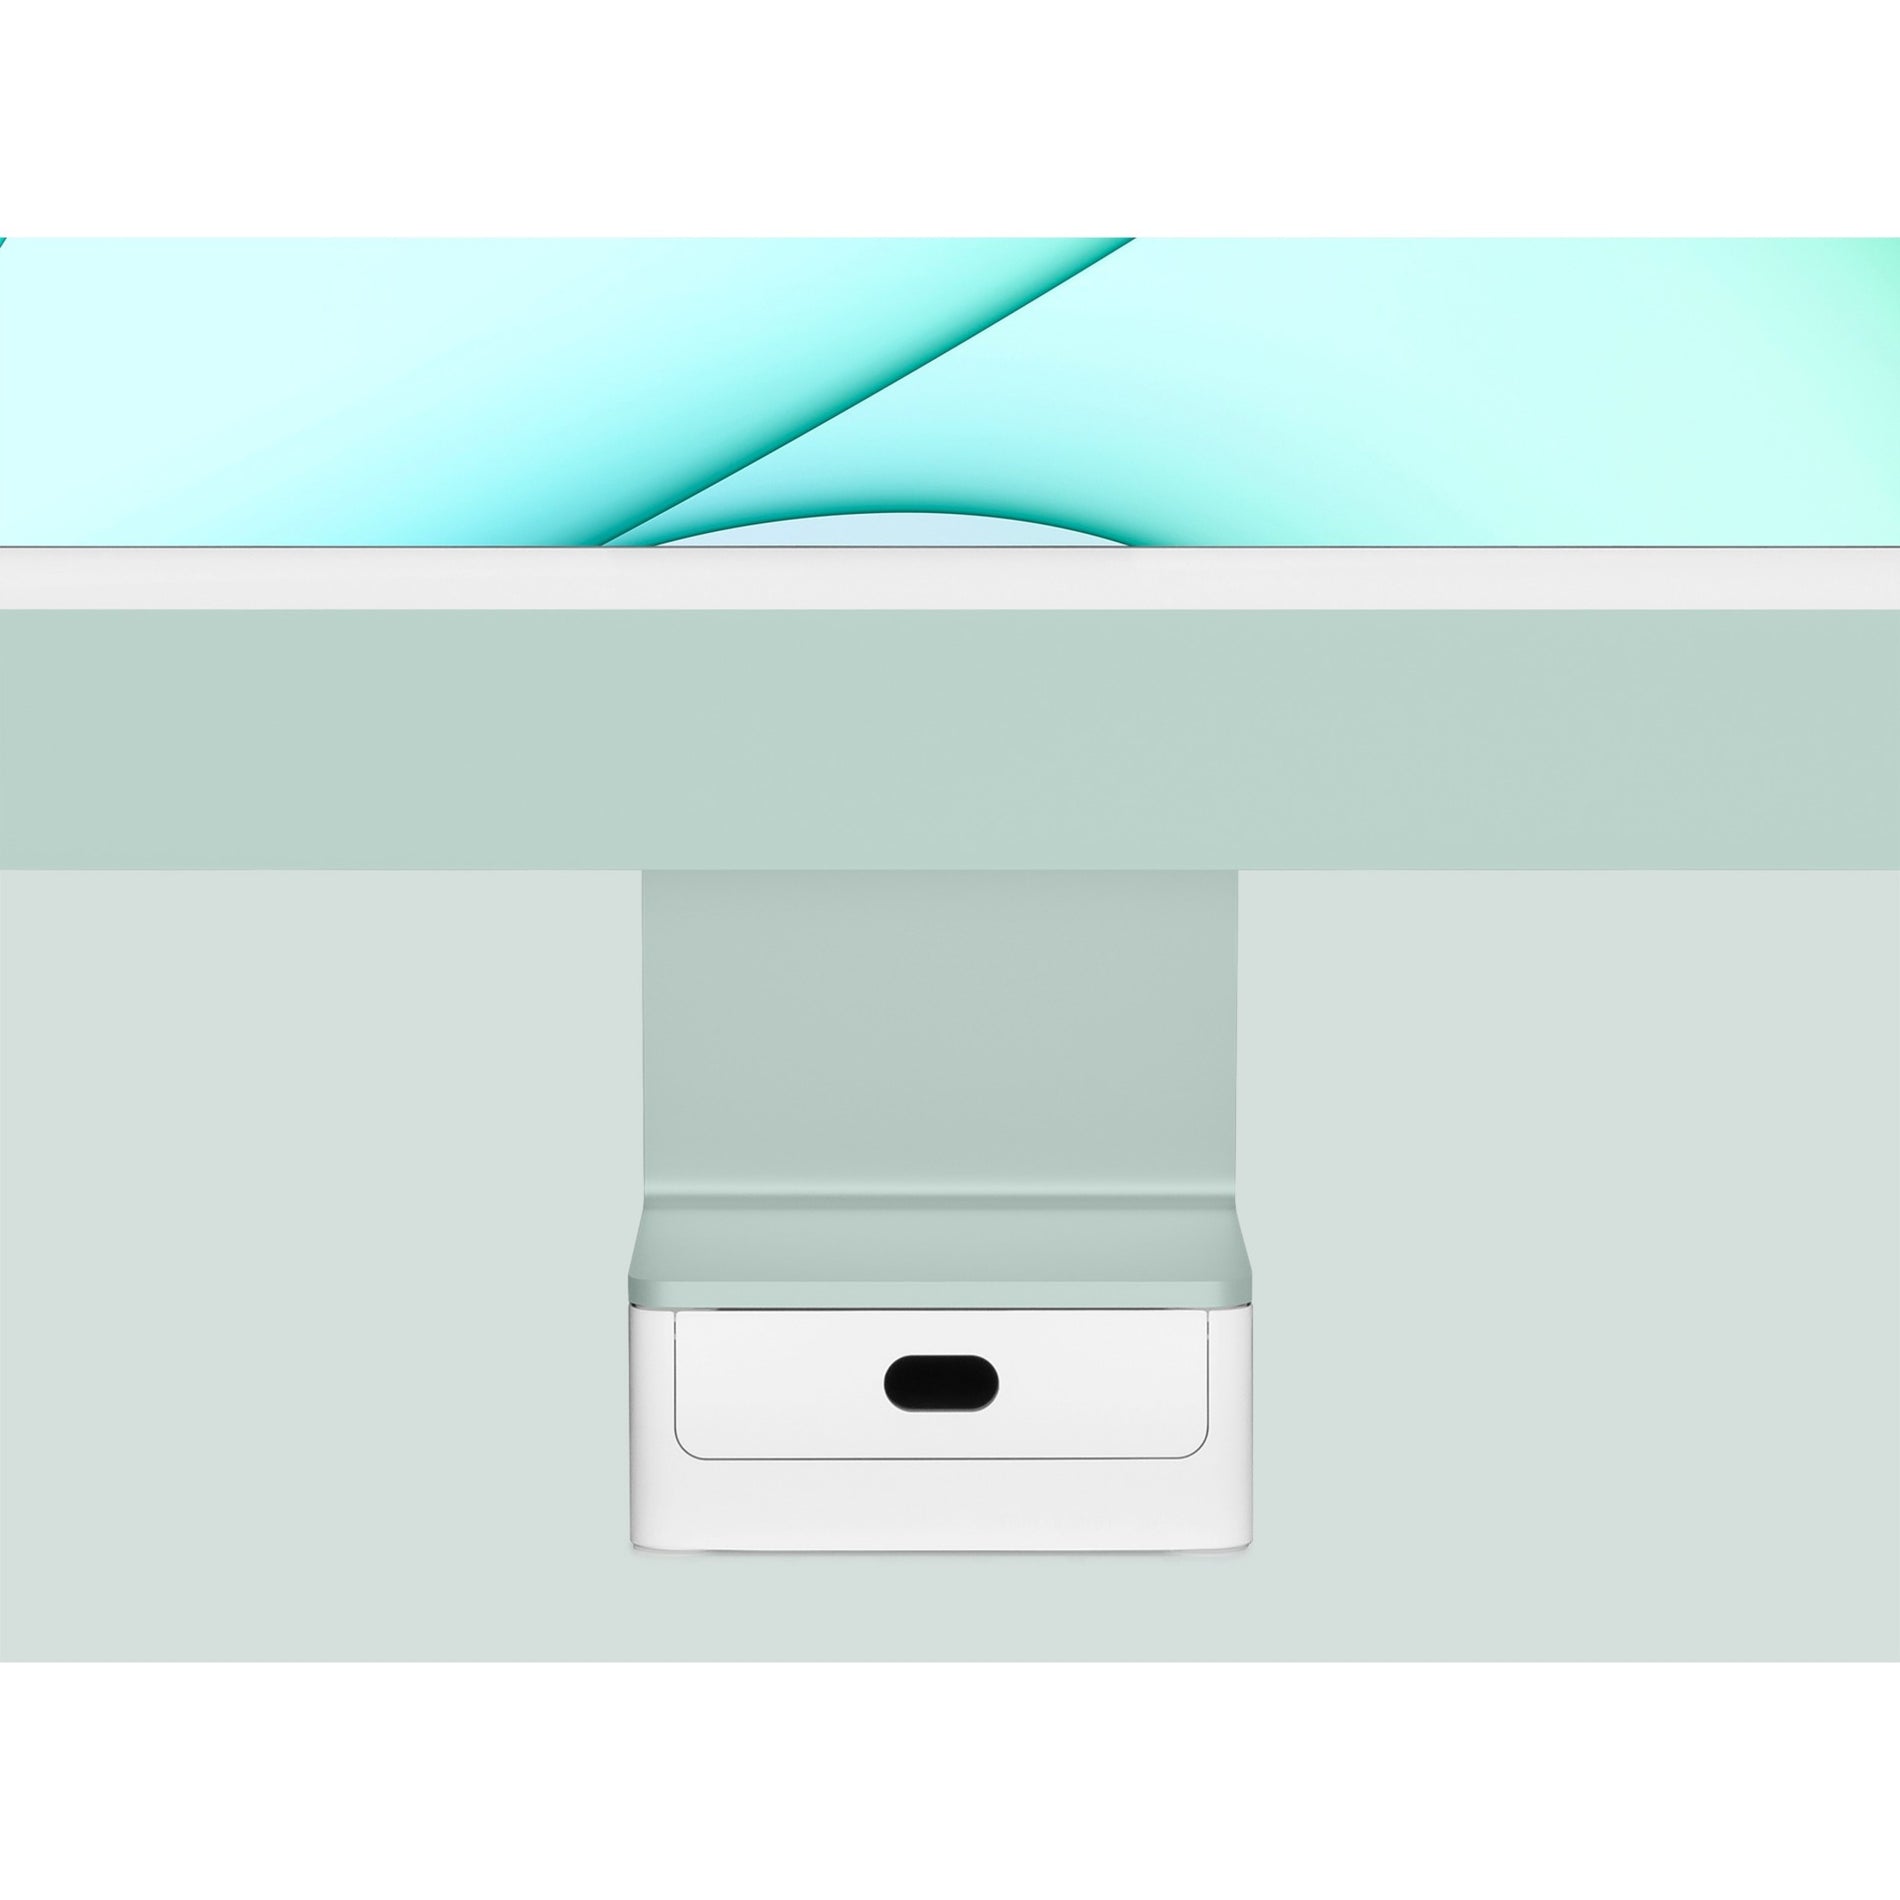 Rain Design 10046 mBase iMac Stand 24" iMac White, Cable Management, Drawer